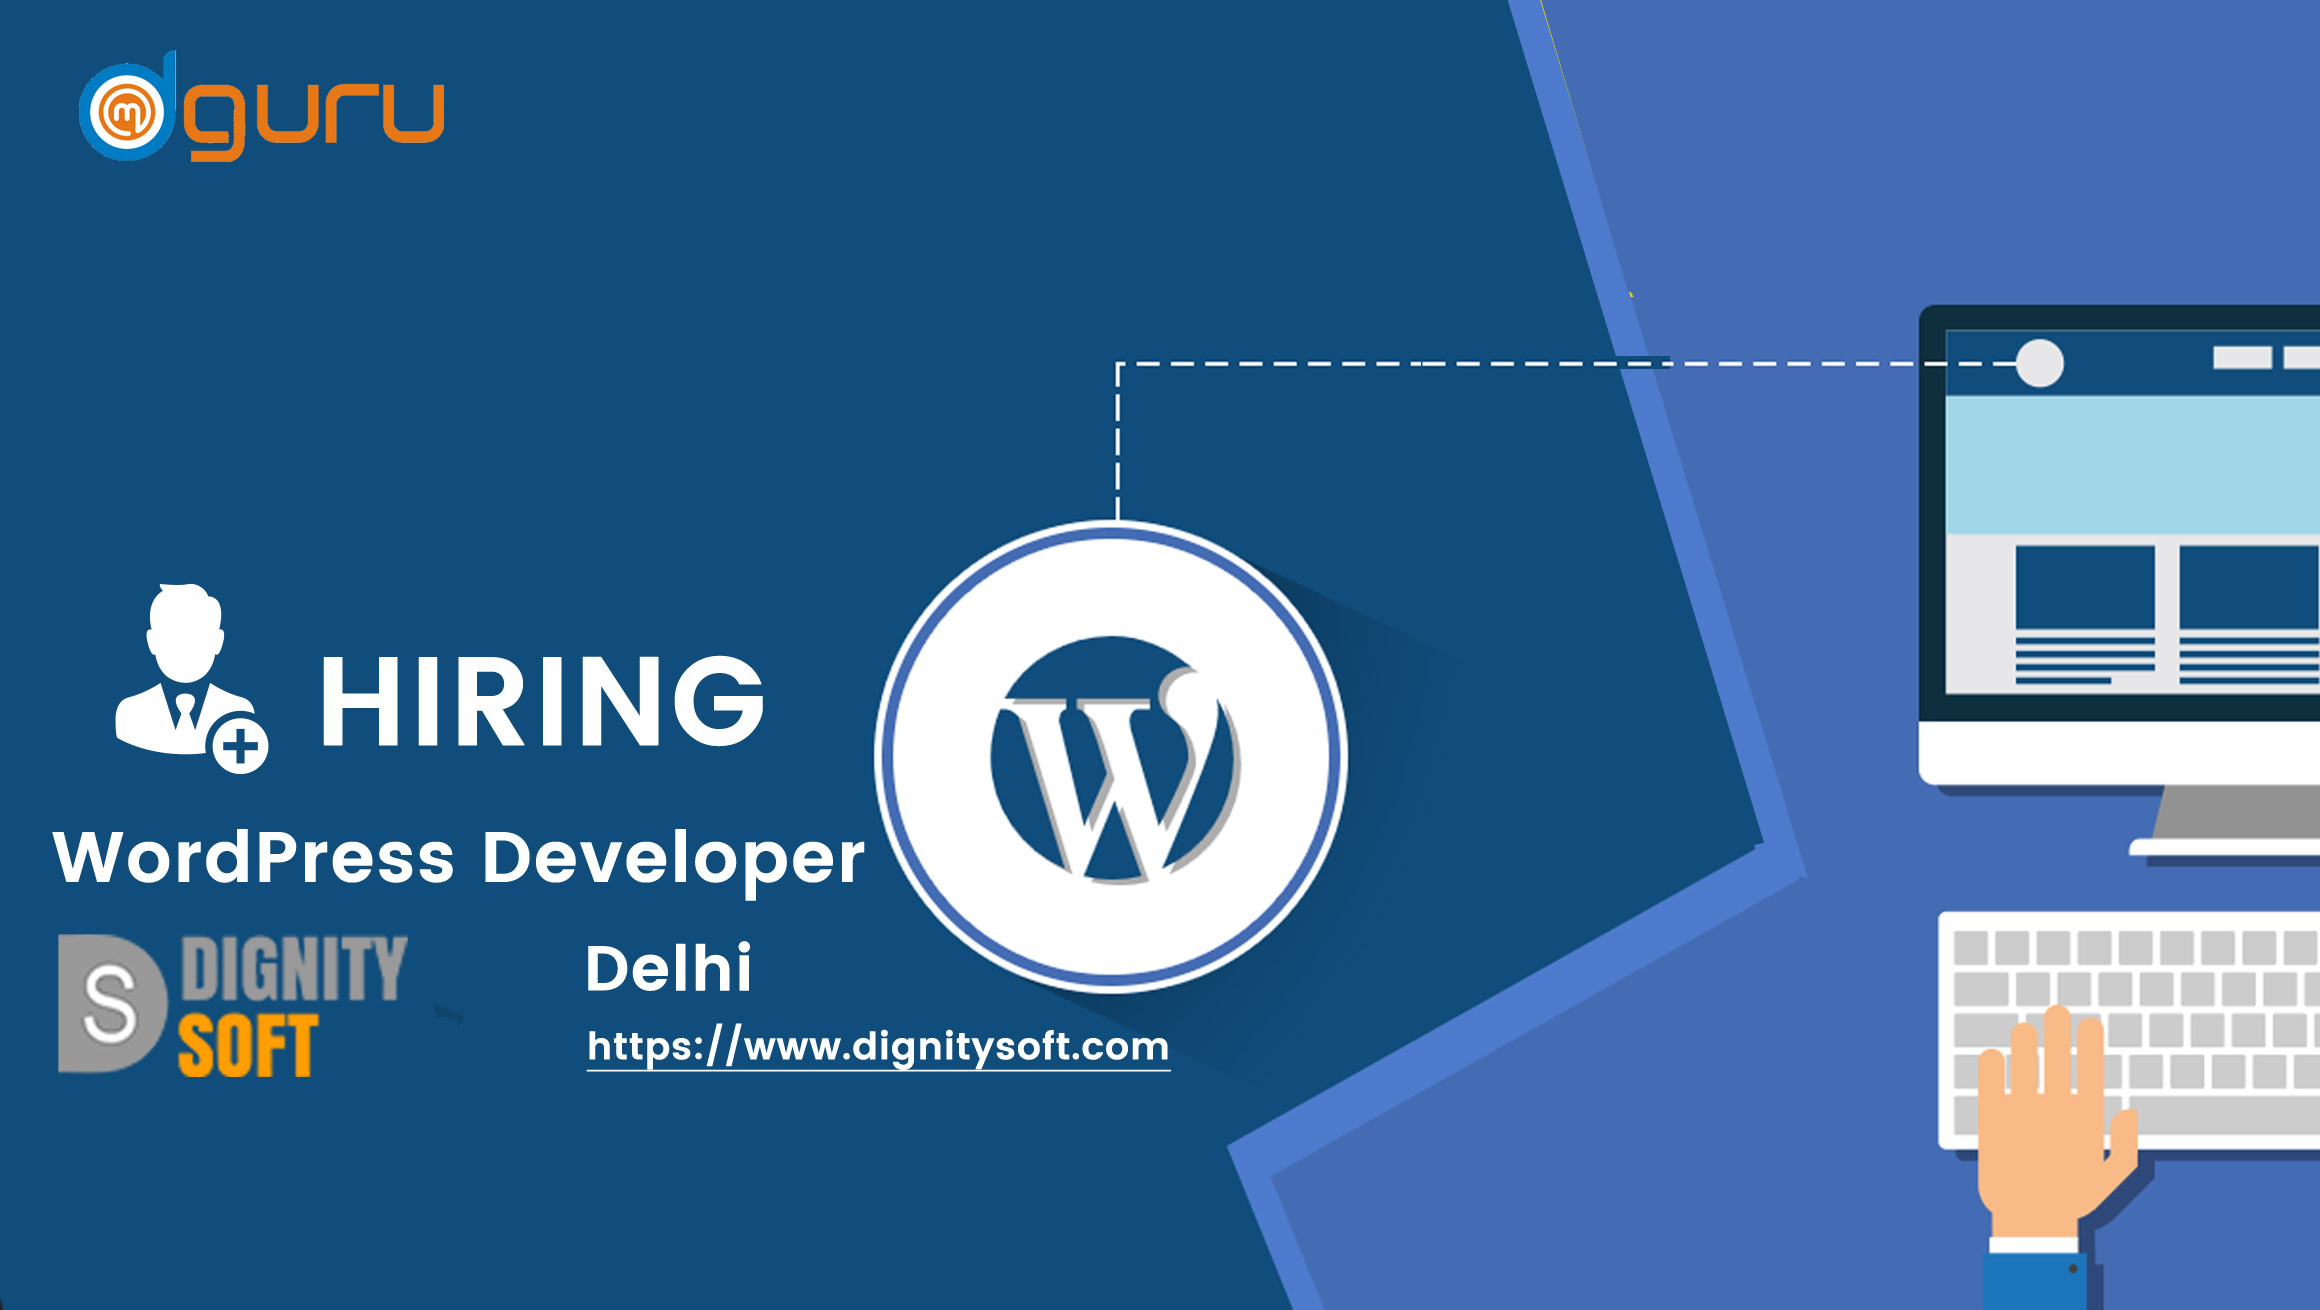 wordpress developer job Dignity Software Private Limited Gurgaon, India